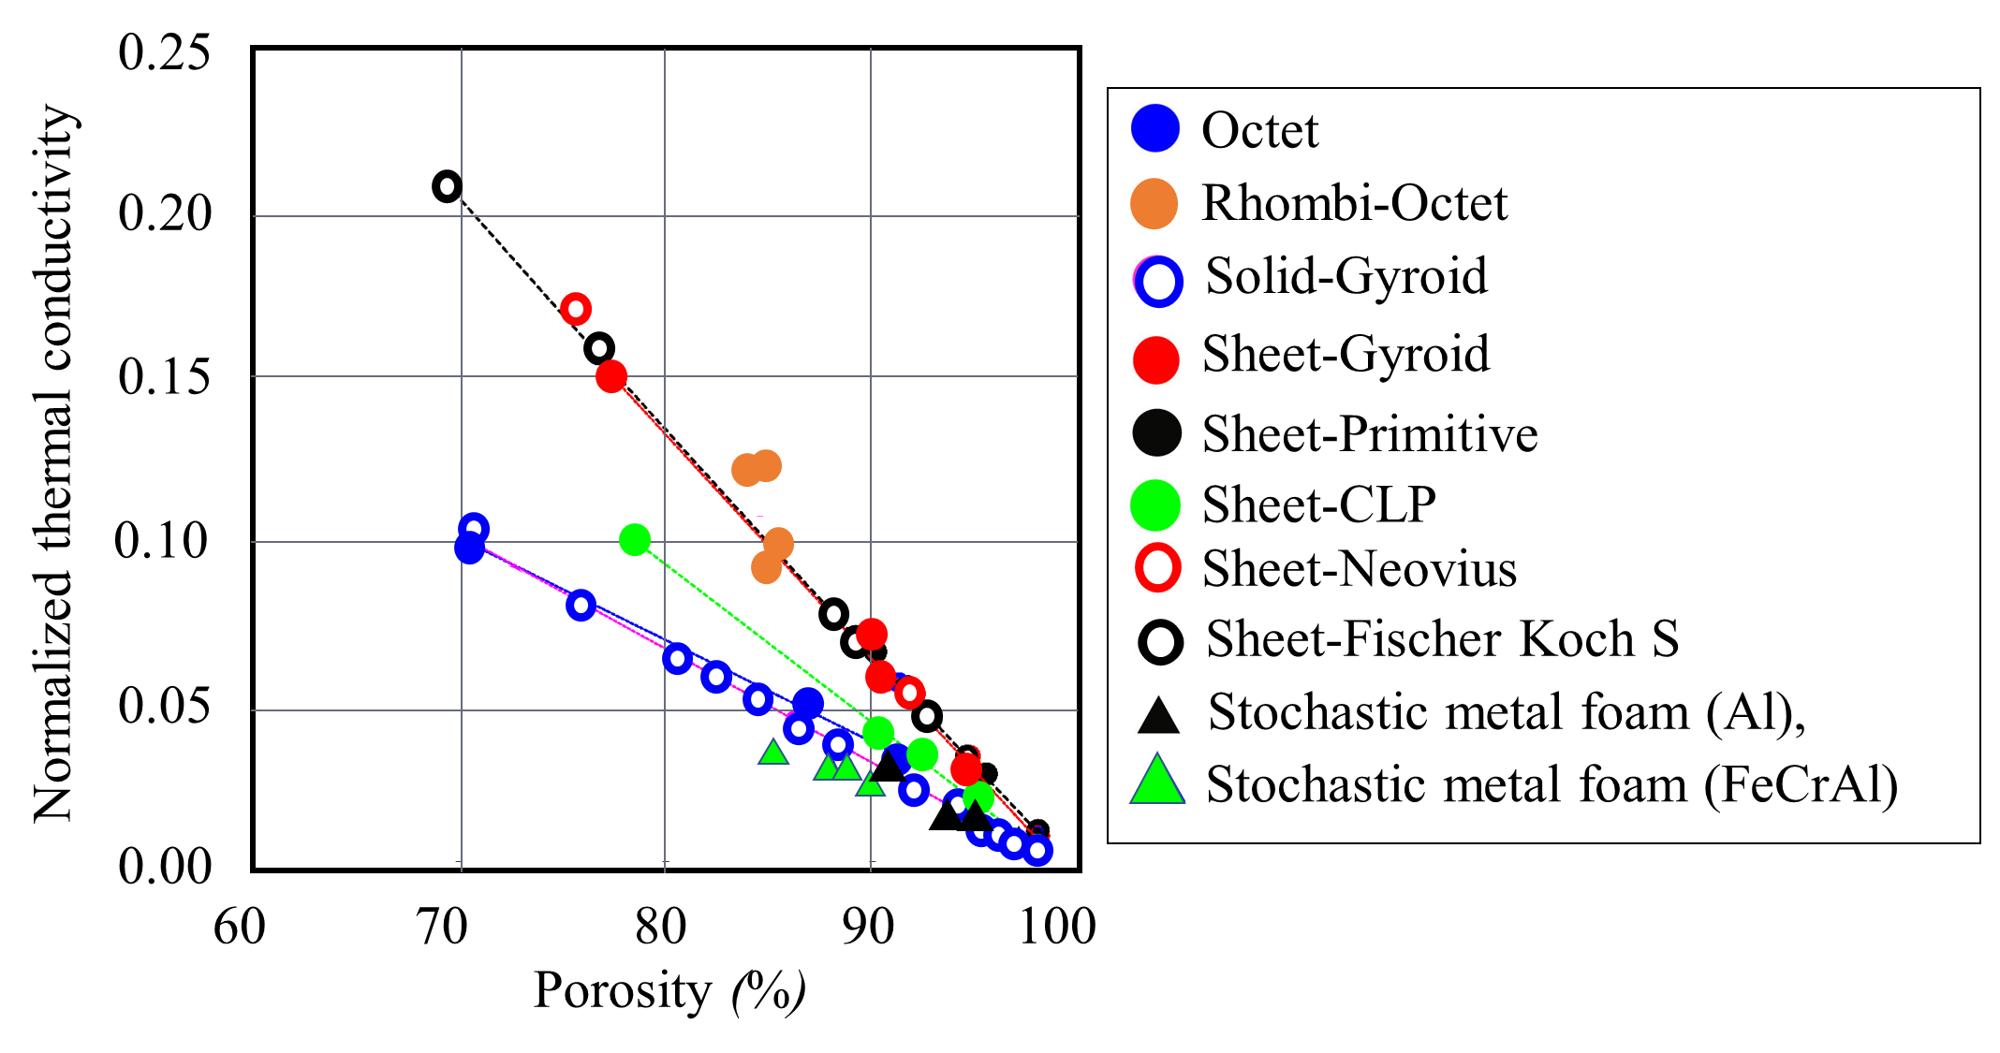 Normalized thermal conductivity for different lattices. Octet [20], Rhombi-Octet [21], Solid-Gyroid [22], Solid-Primitive[22], Sheet-CLP [22], Sheet-Neovius [22], Sheet-Fischer Koch S [22], Stochastic metal foam (Al) [23], Stochastic metal foam (FeCrAl) [24].